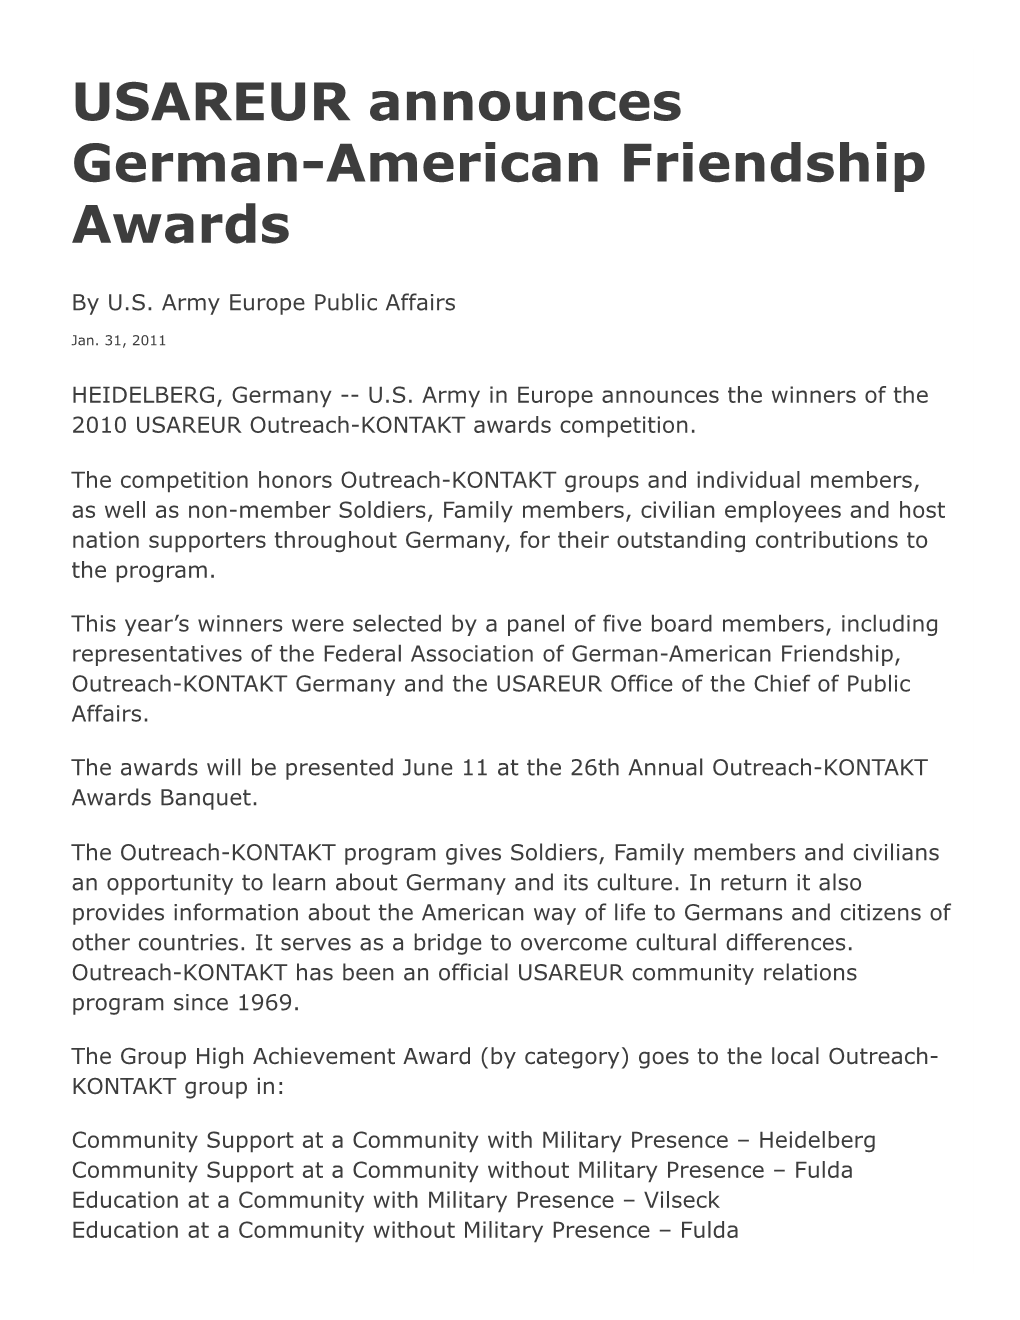 USAREUR Announces German-American Friendship Awards